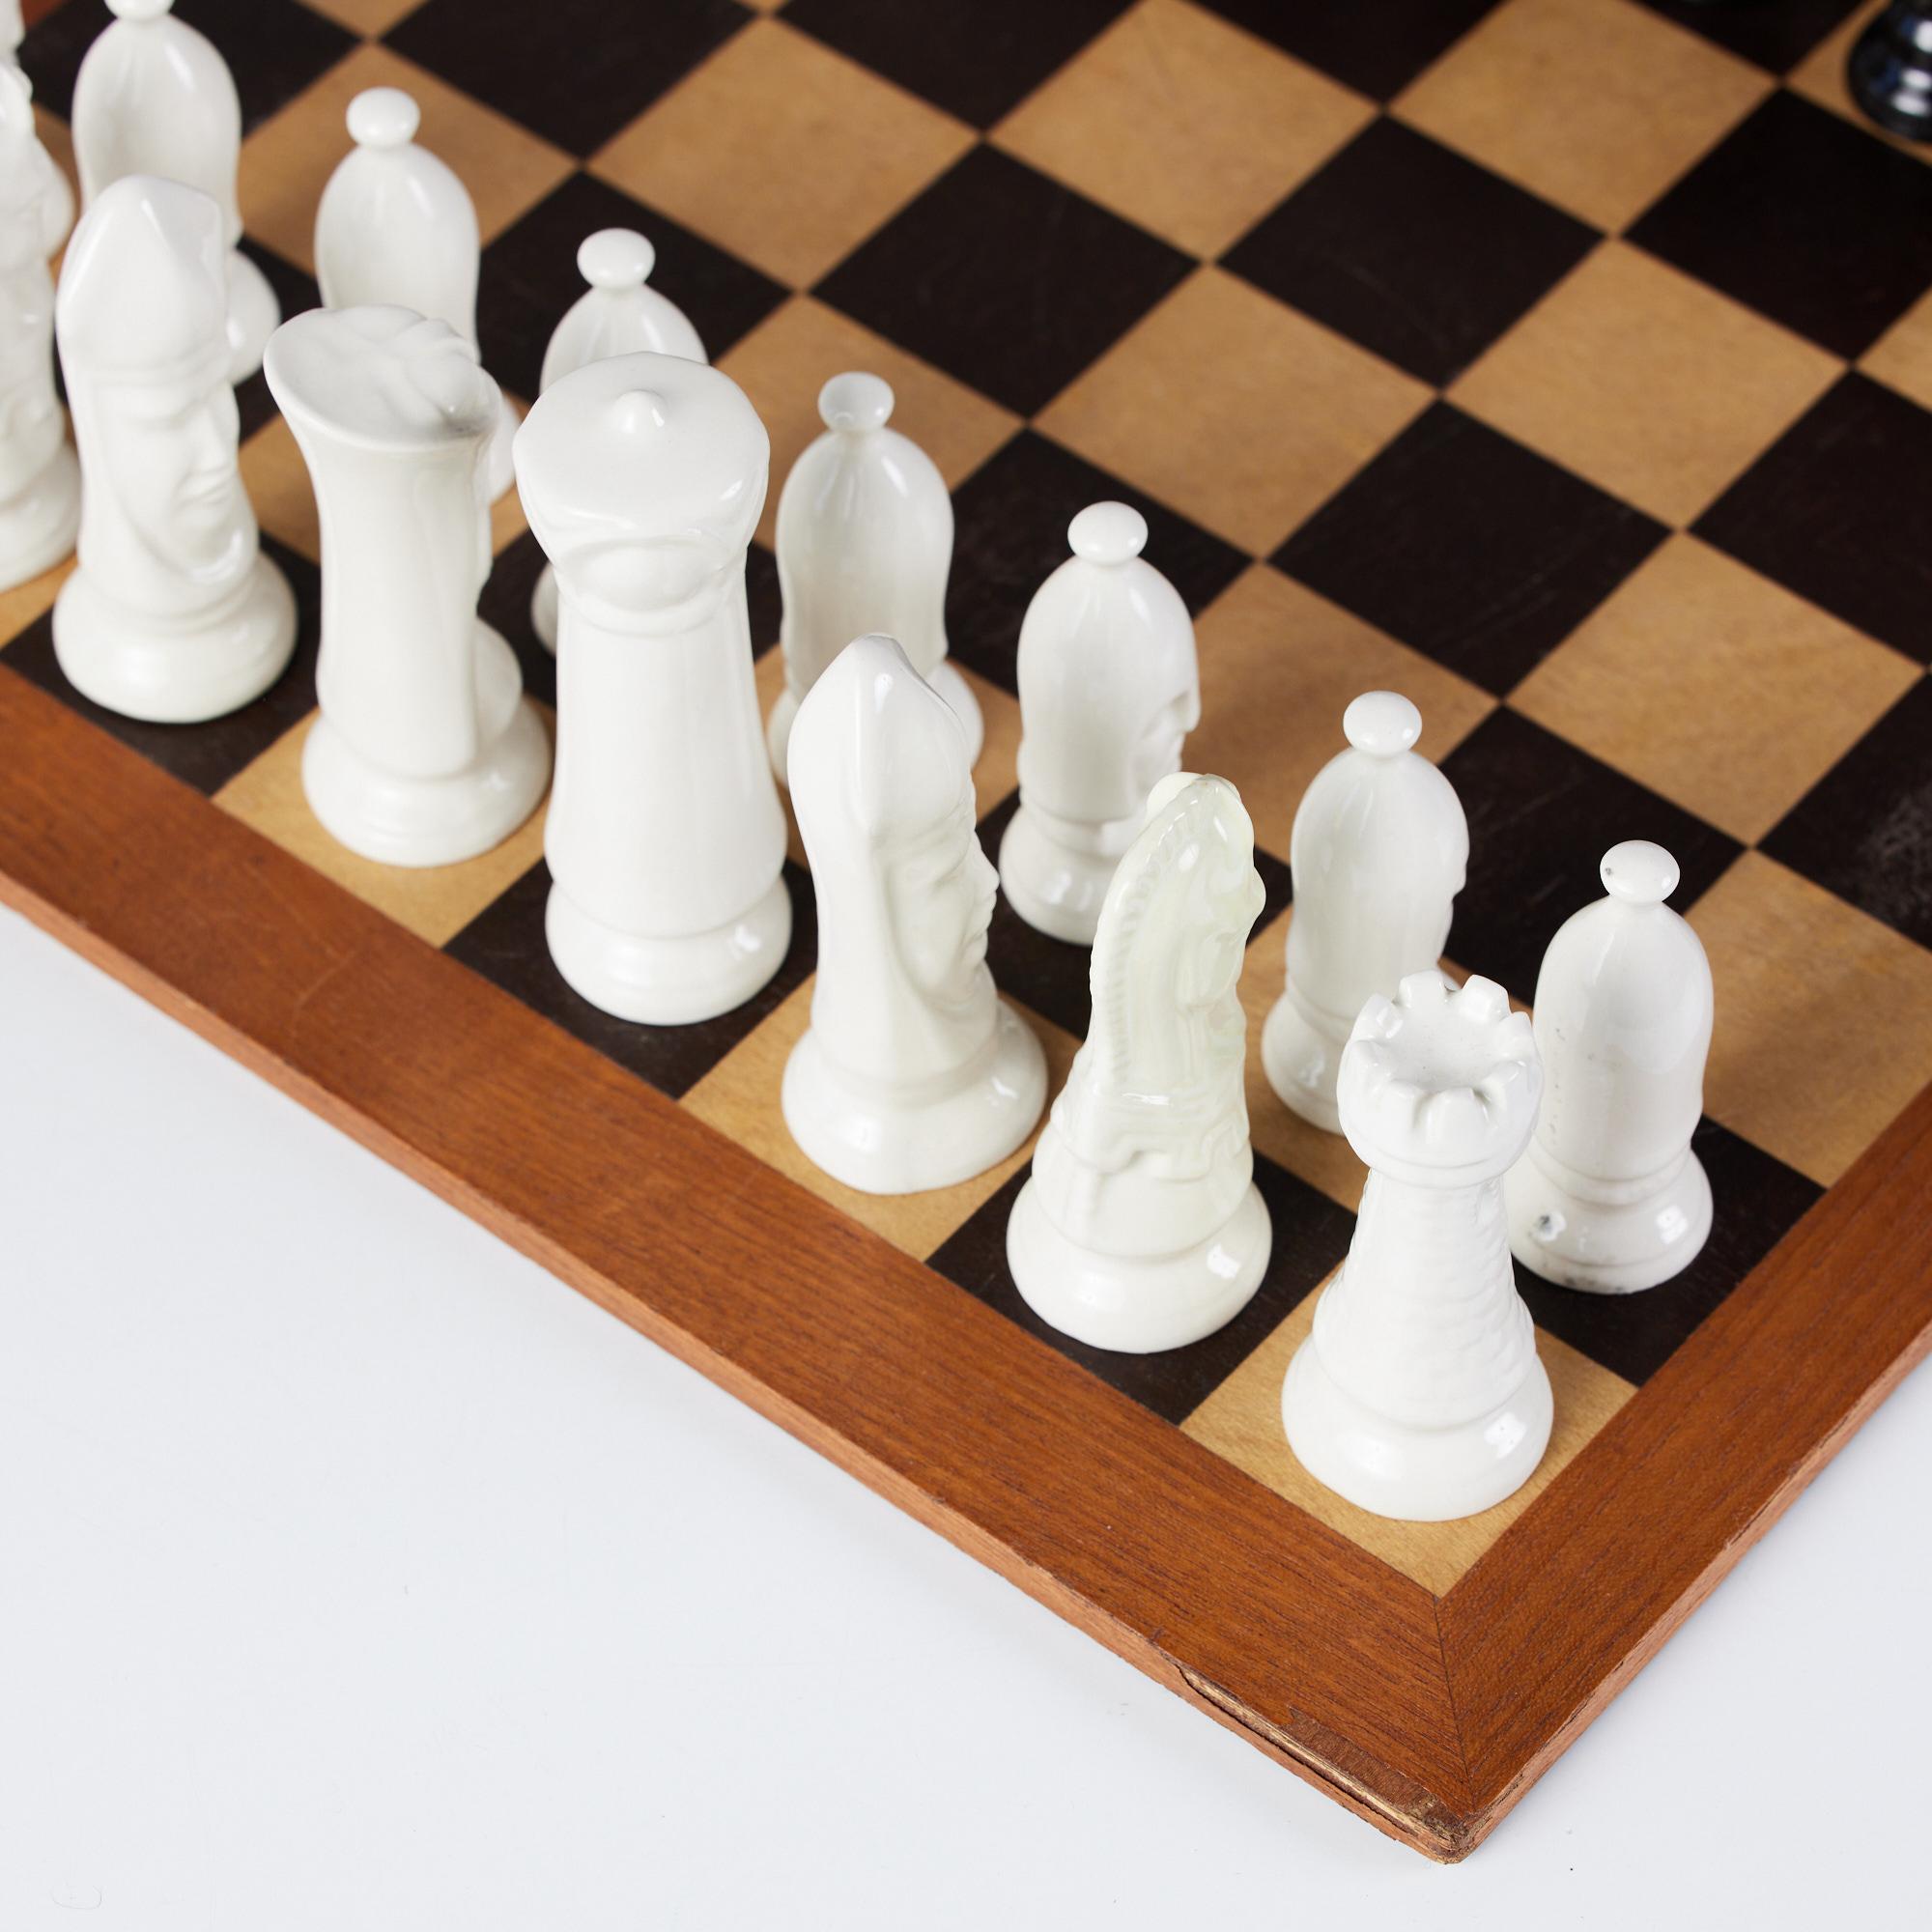 Glazed Chess Set with Ceramic Game Pieces